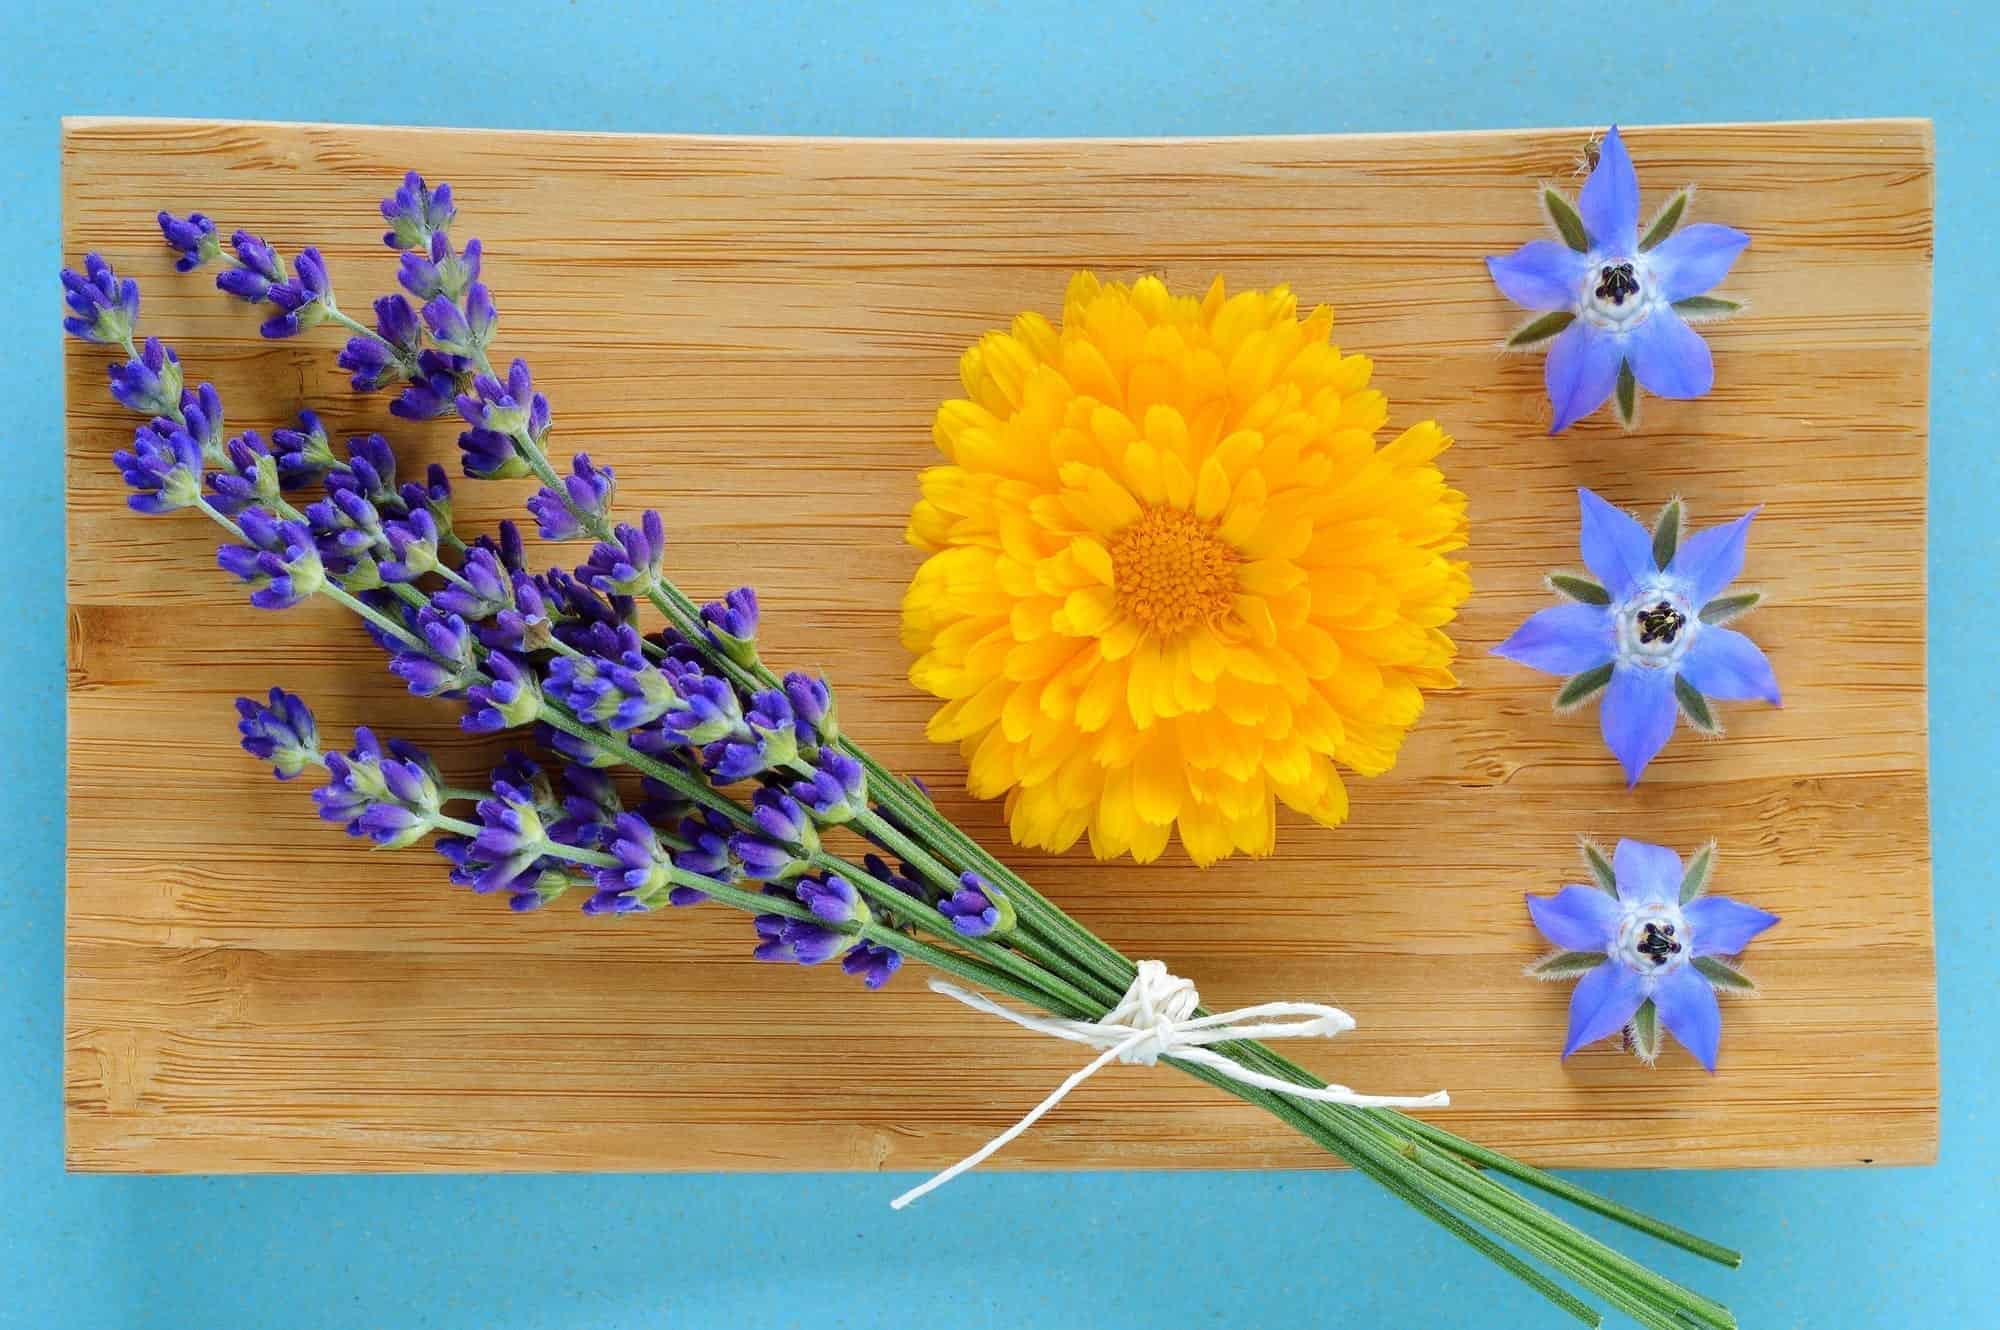 Edible flowers on a wooden board